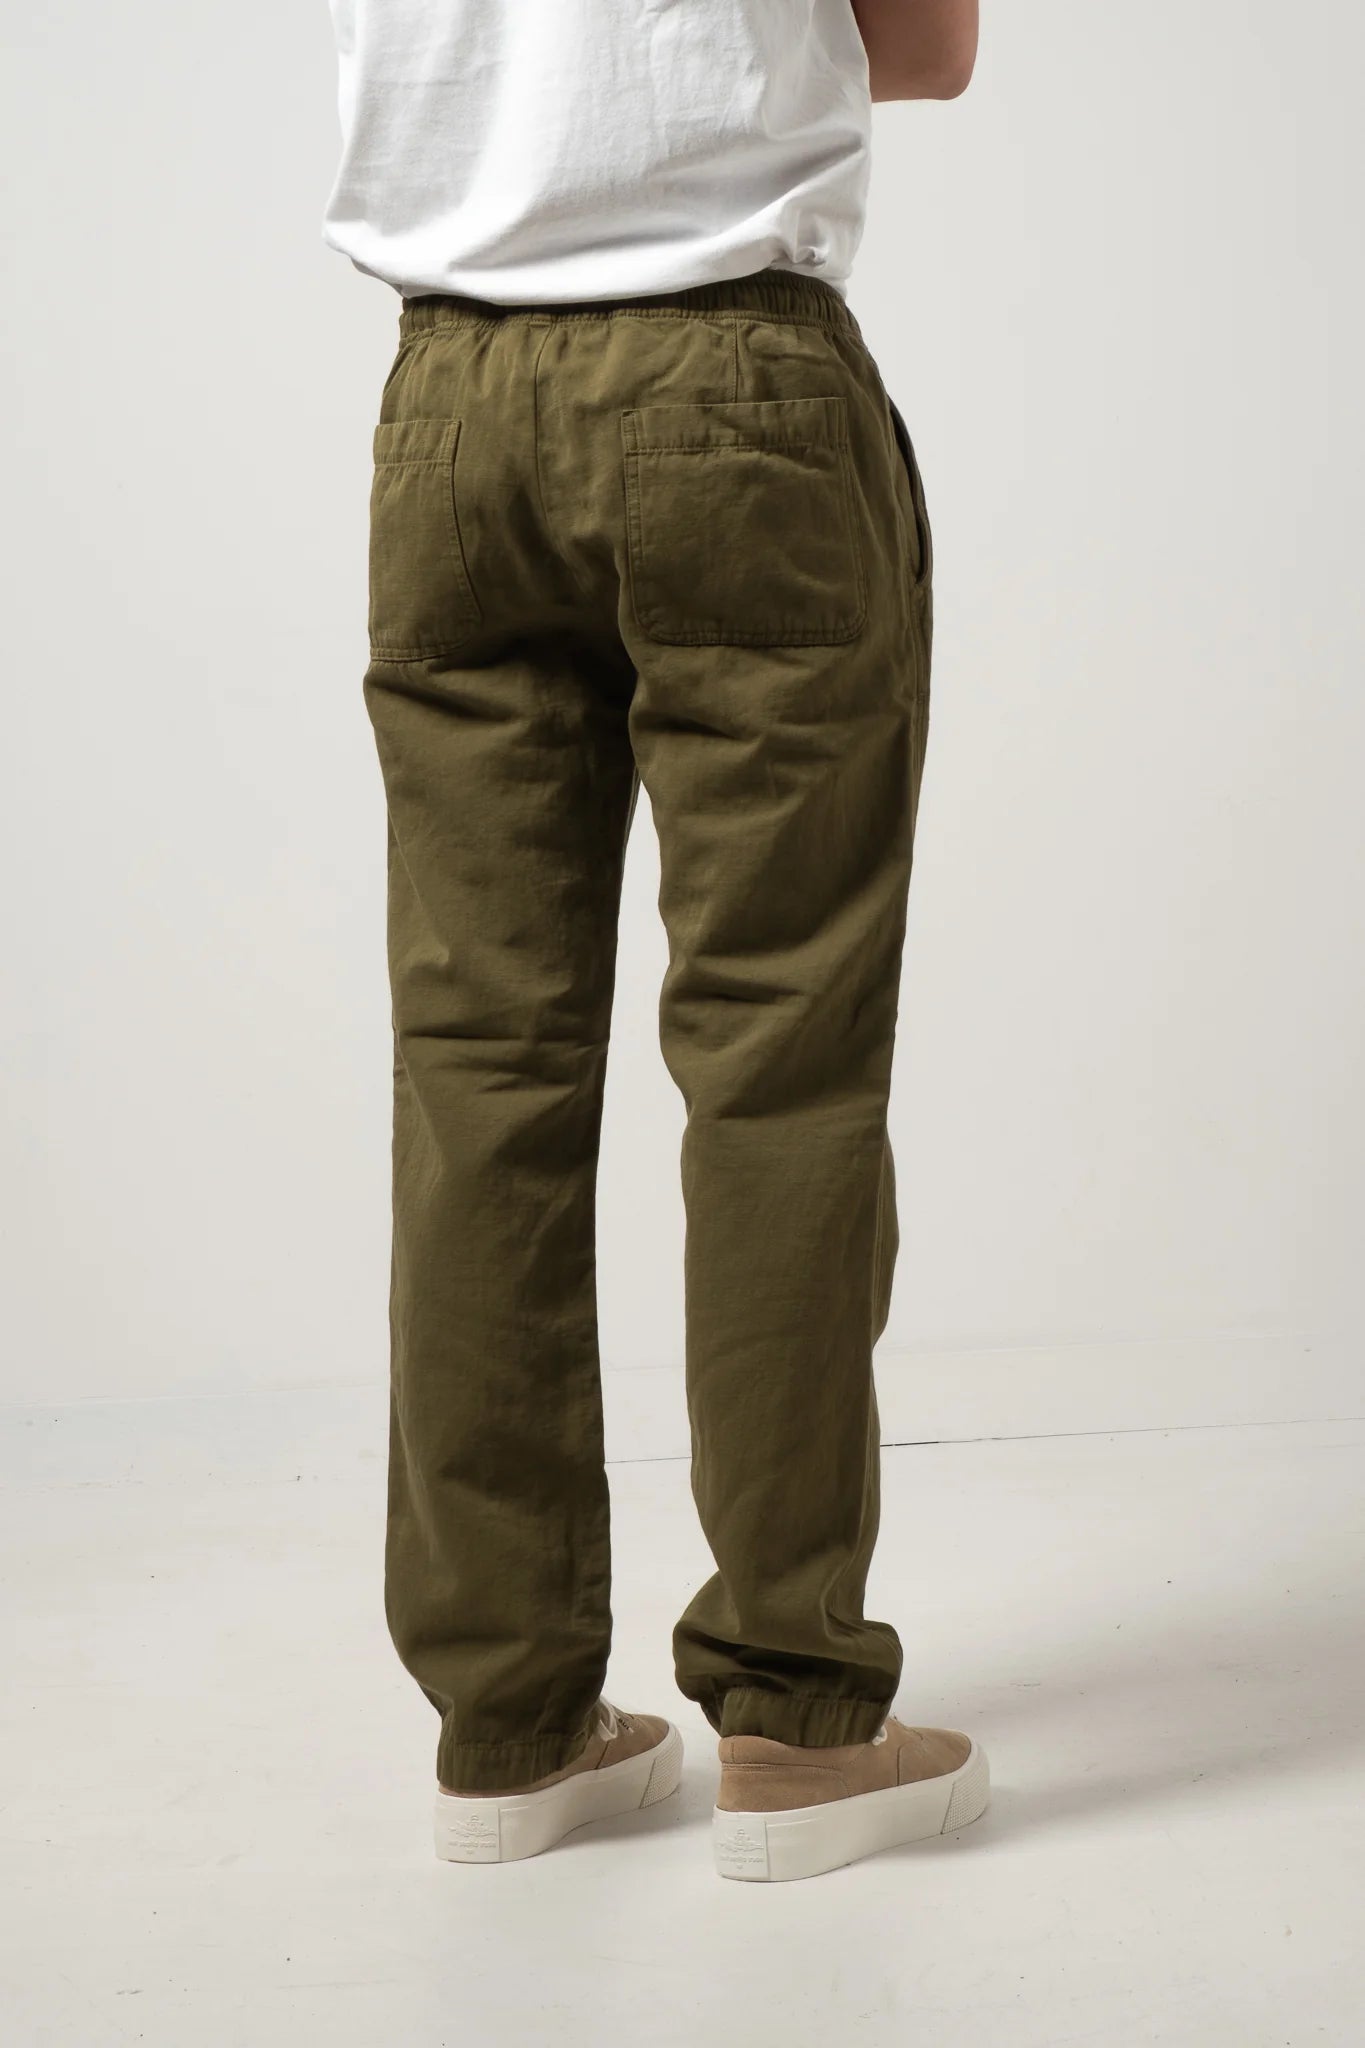 C.O.F. Studio Drawstring Pants Light Cotton Linen in olive